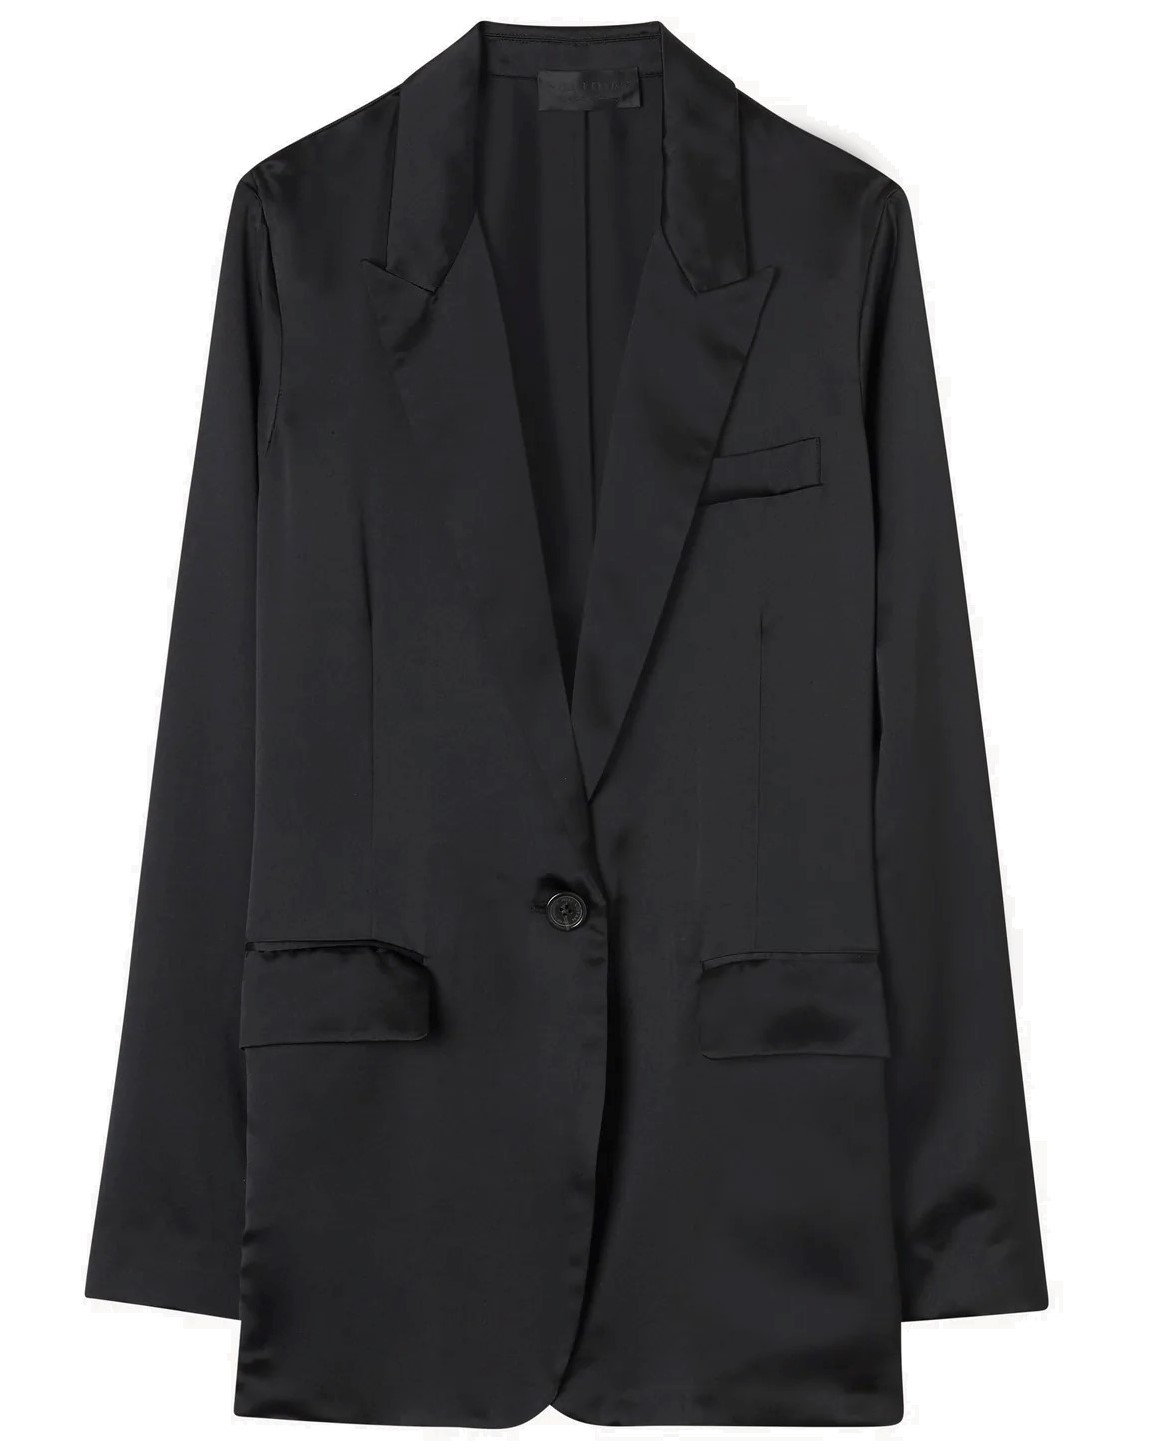 NILI LOTAN Eveline Silk Blazer in Black 4/M